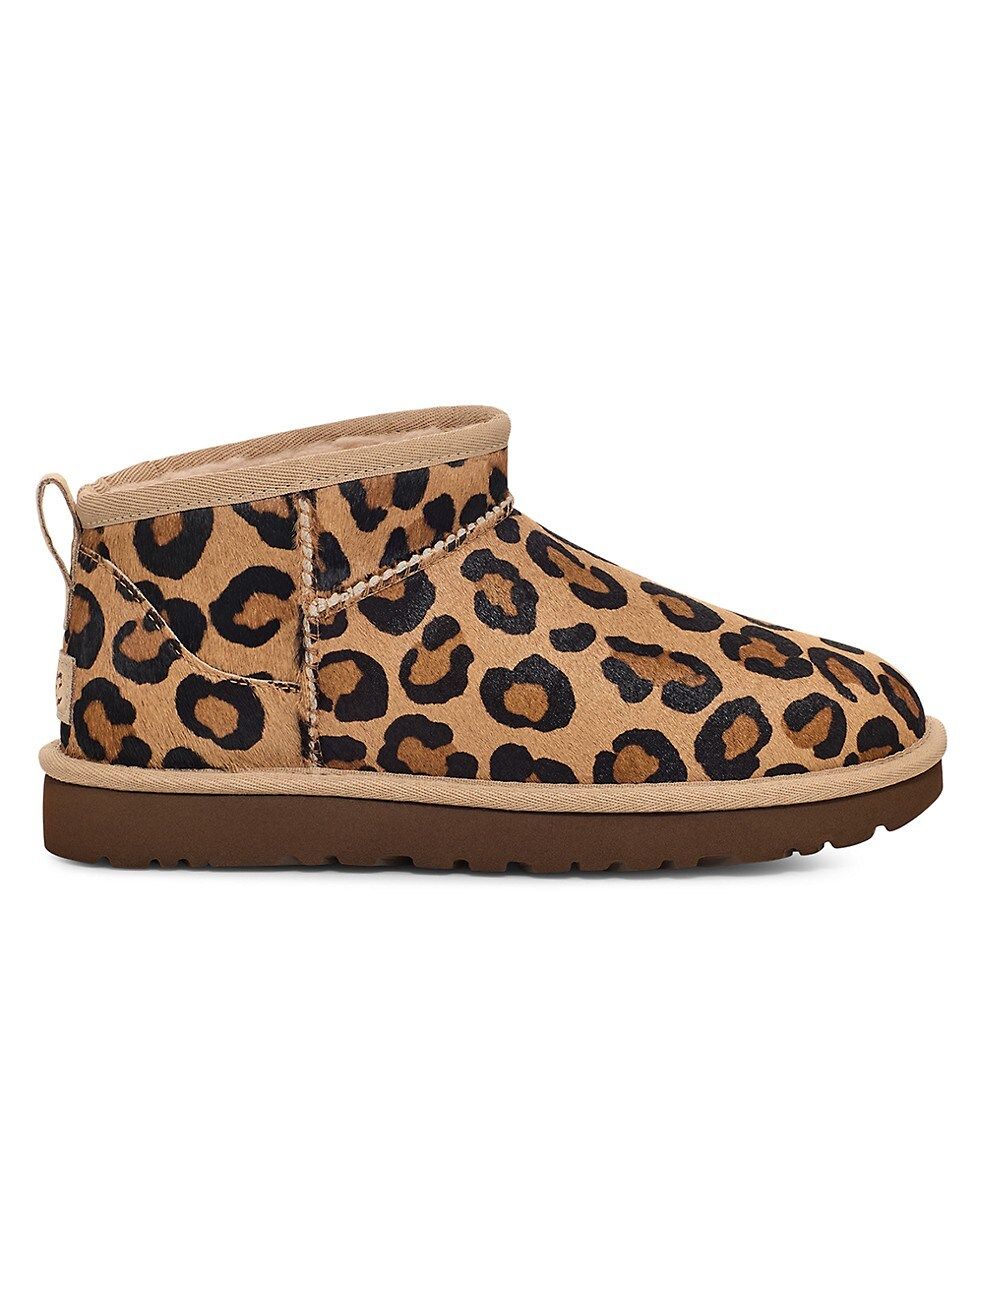 UGG Classic Ultra Mini Leopard-Print Calf Hair Boots | Saks Fifth Avenue